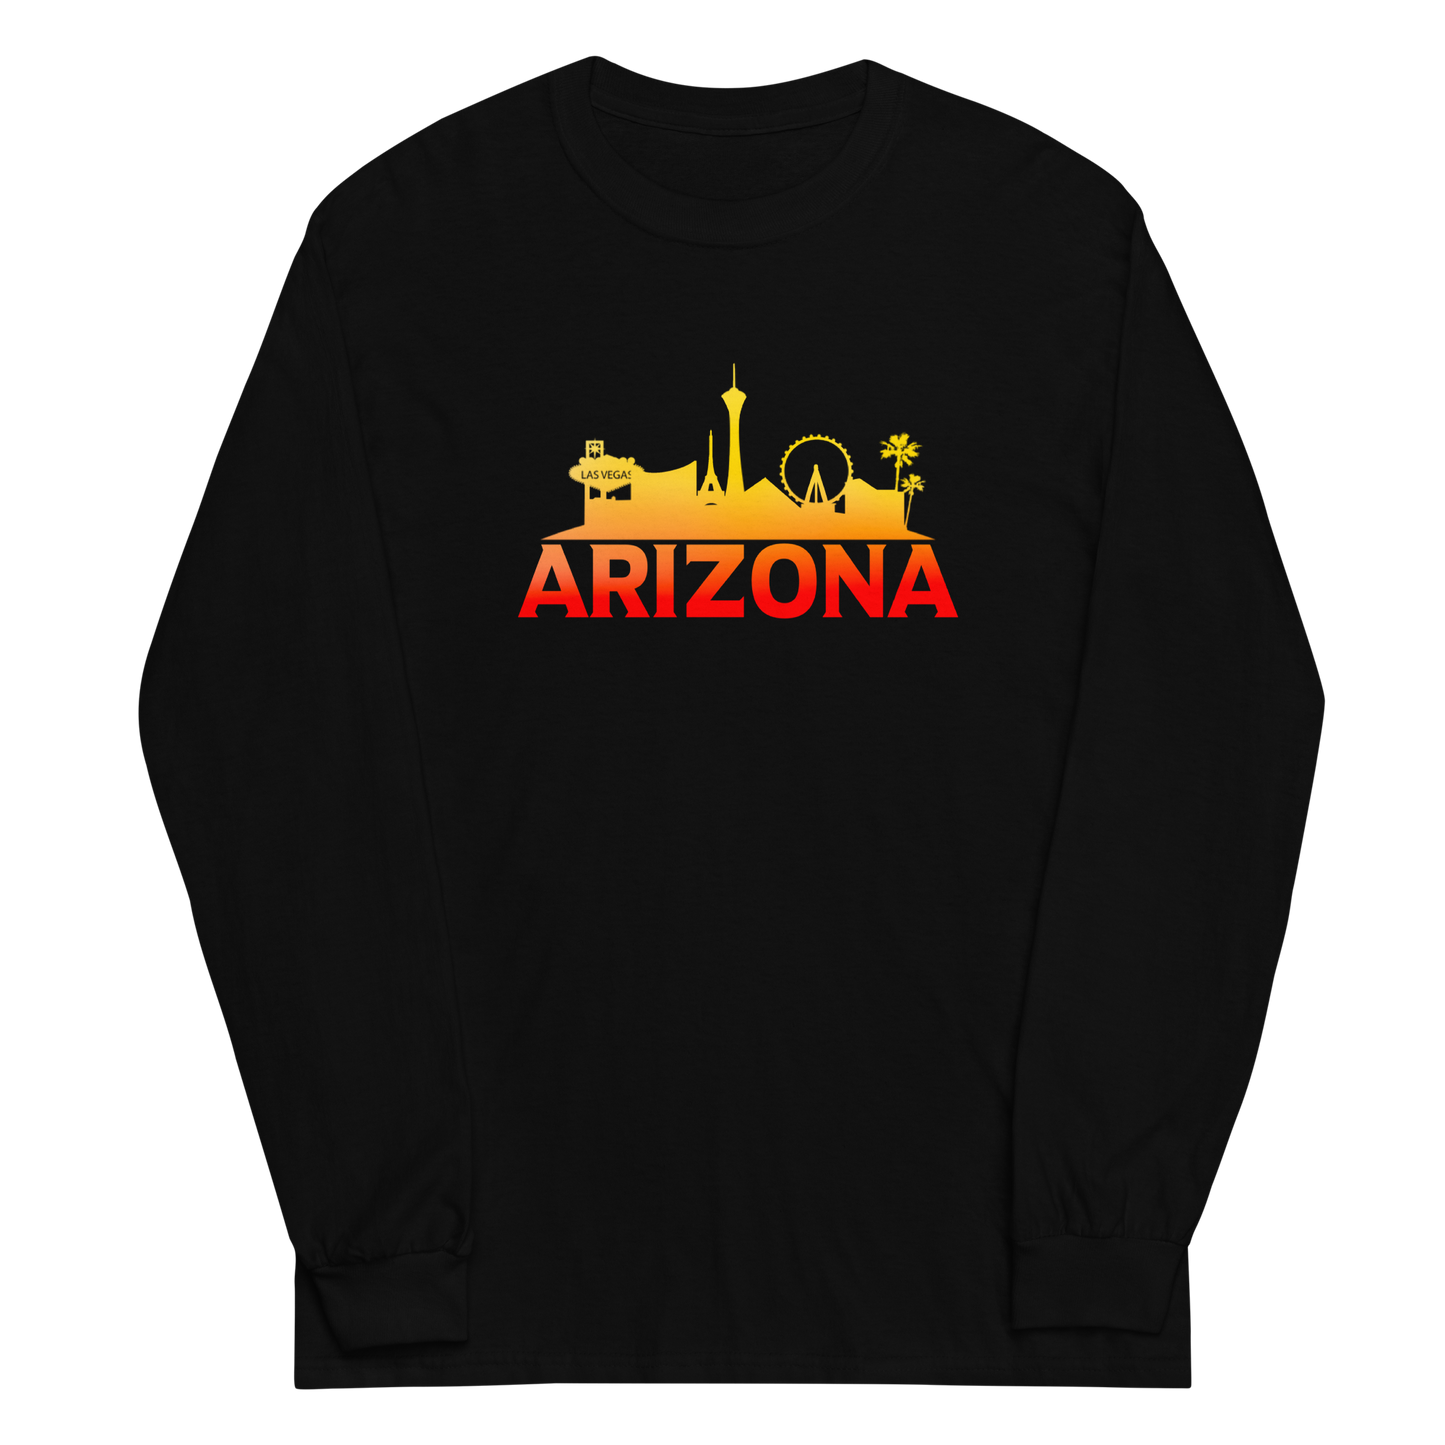 Arizona Long Sleeve